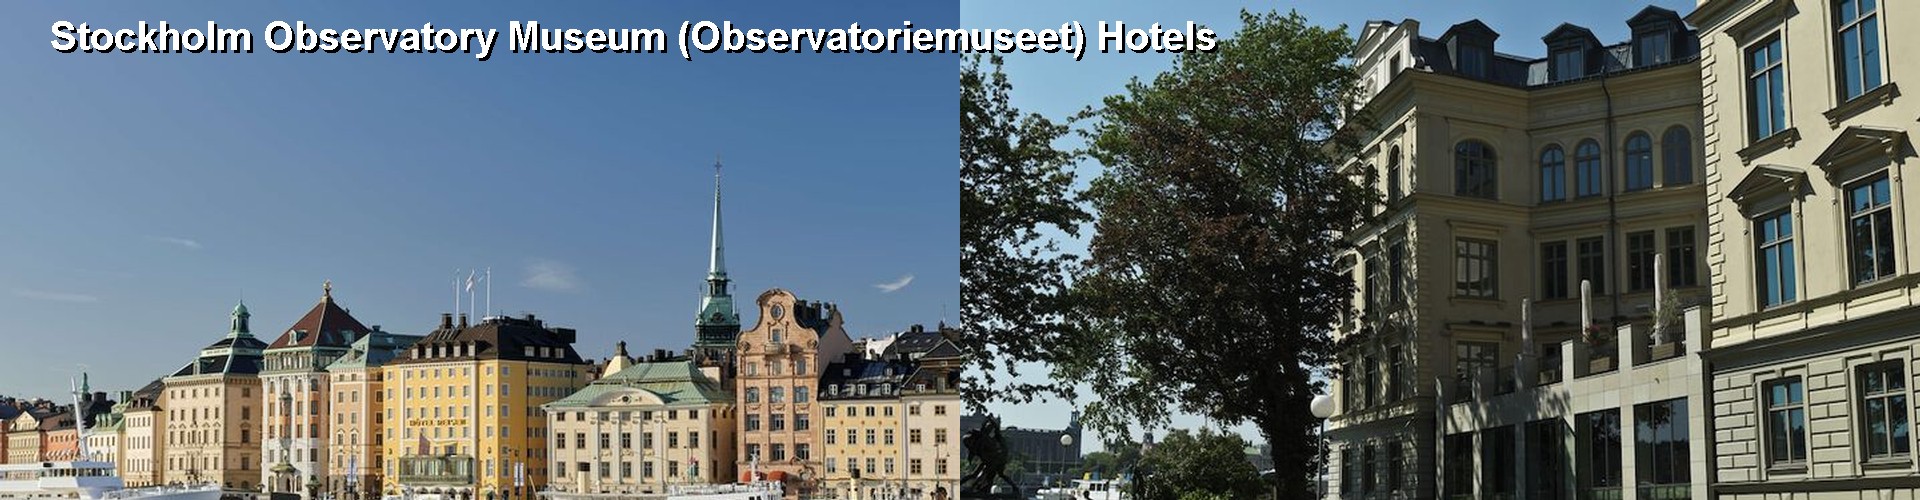 5 Best Hotels near Stockholm Observatory Museum (Observatoriemuseet)